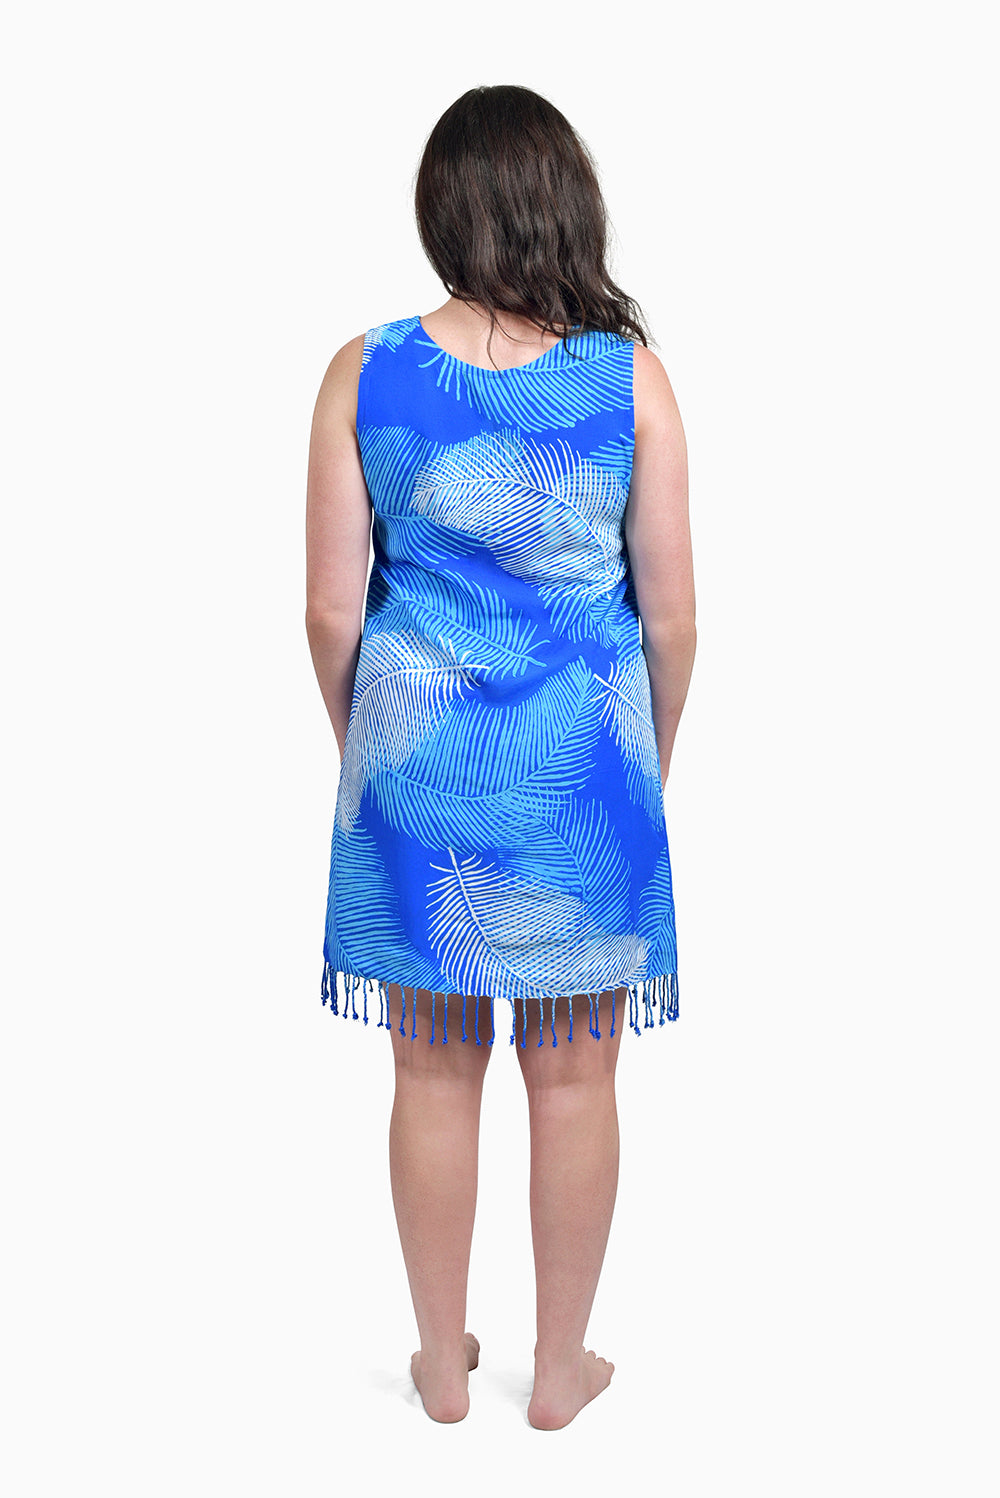 Blue & White (Sky) -  Handmade Batik Tank Frill Dress - Palm Design